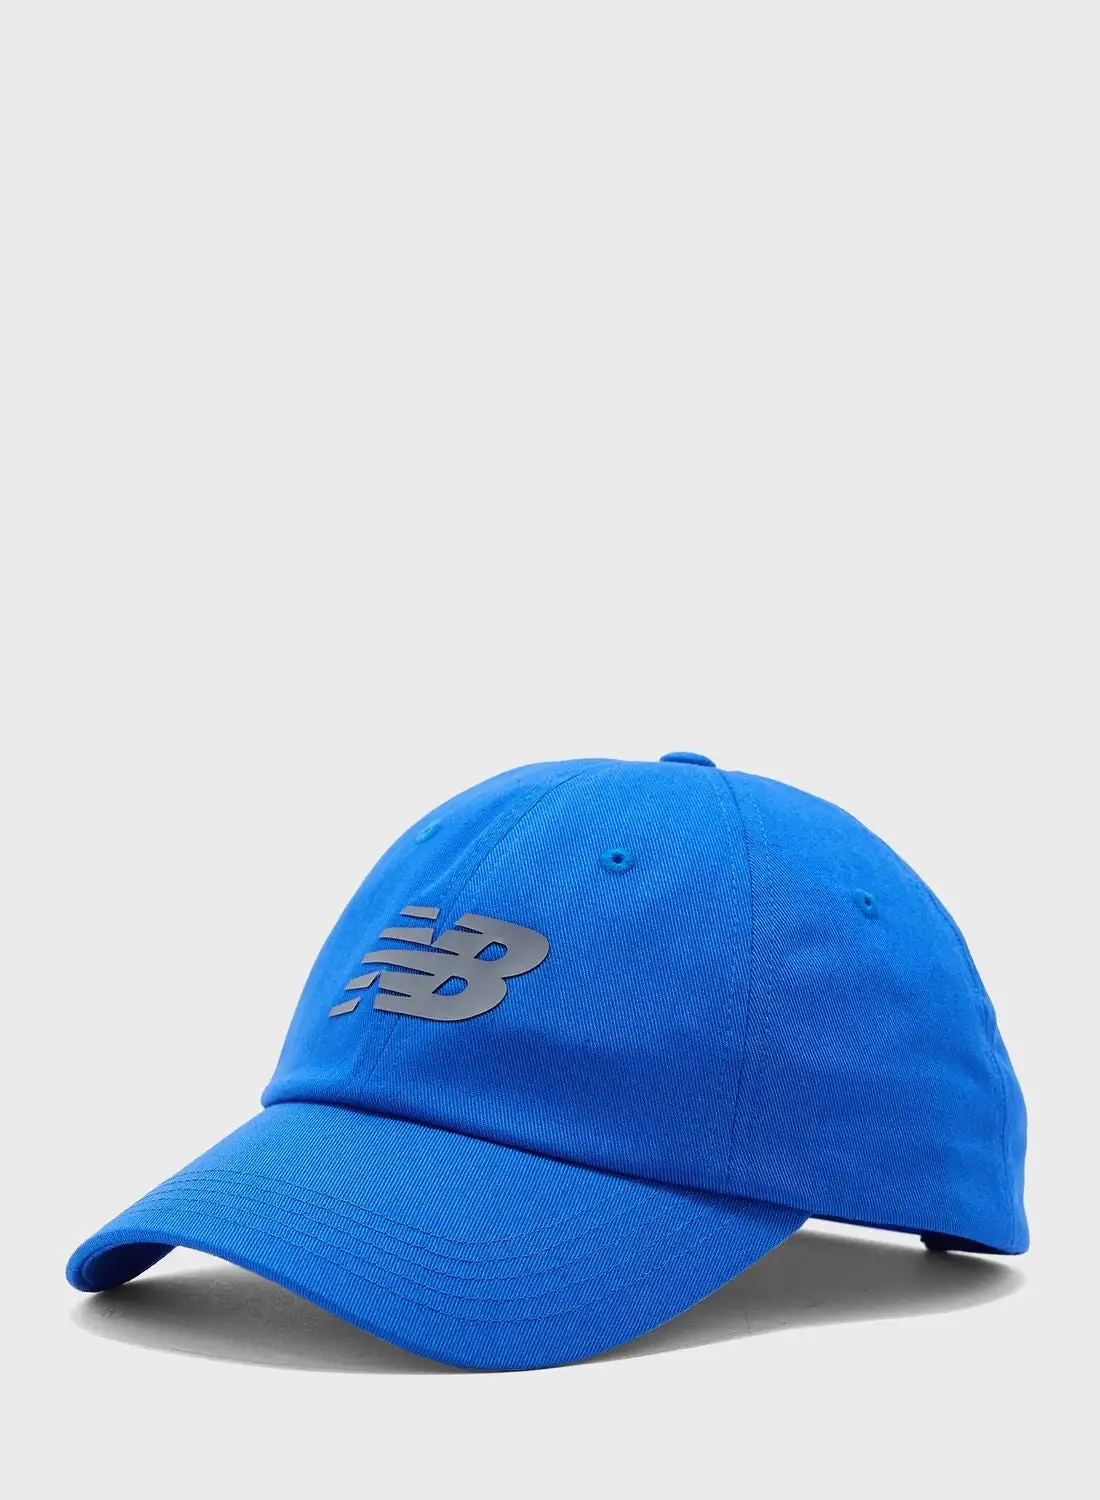 New Balance 6-Panel Curved Brim Snapback Hat